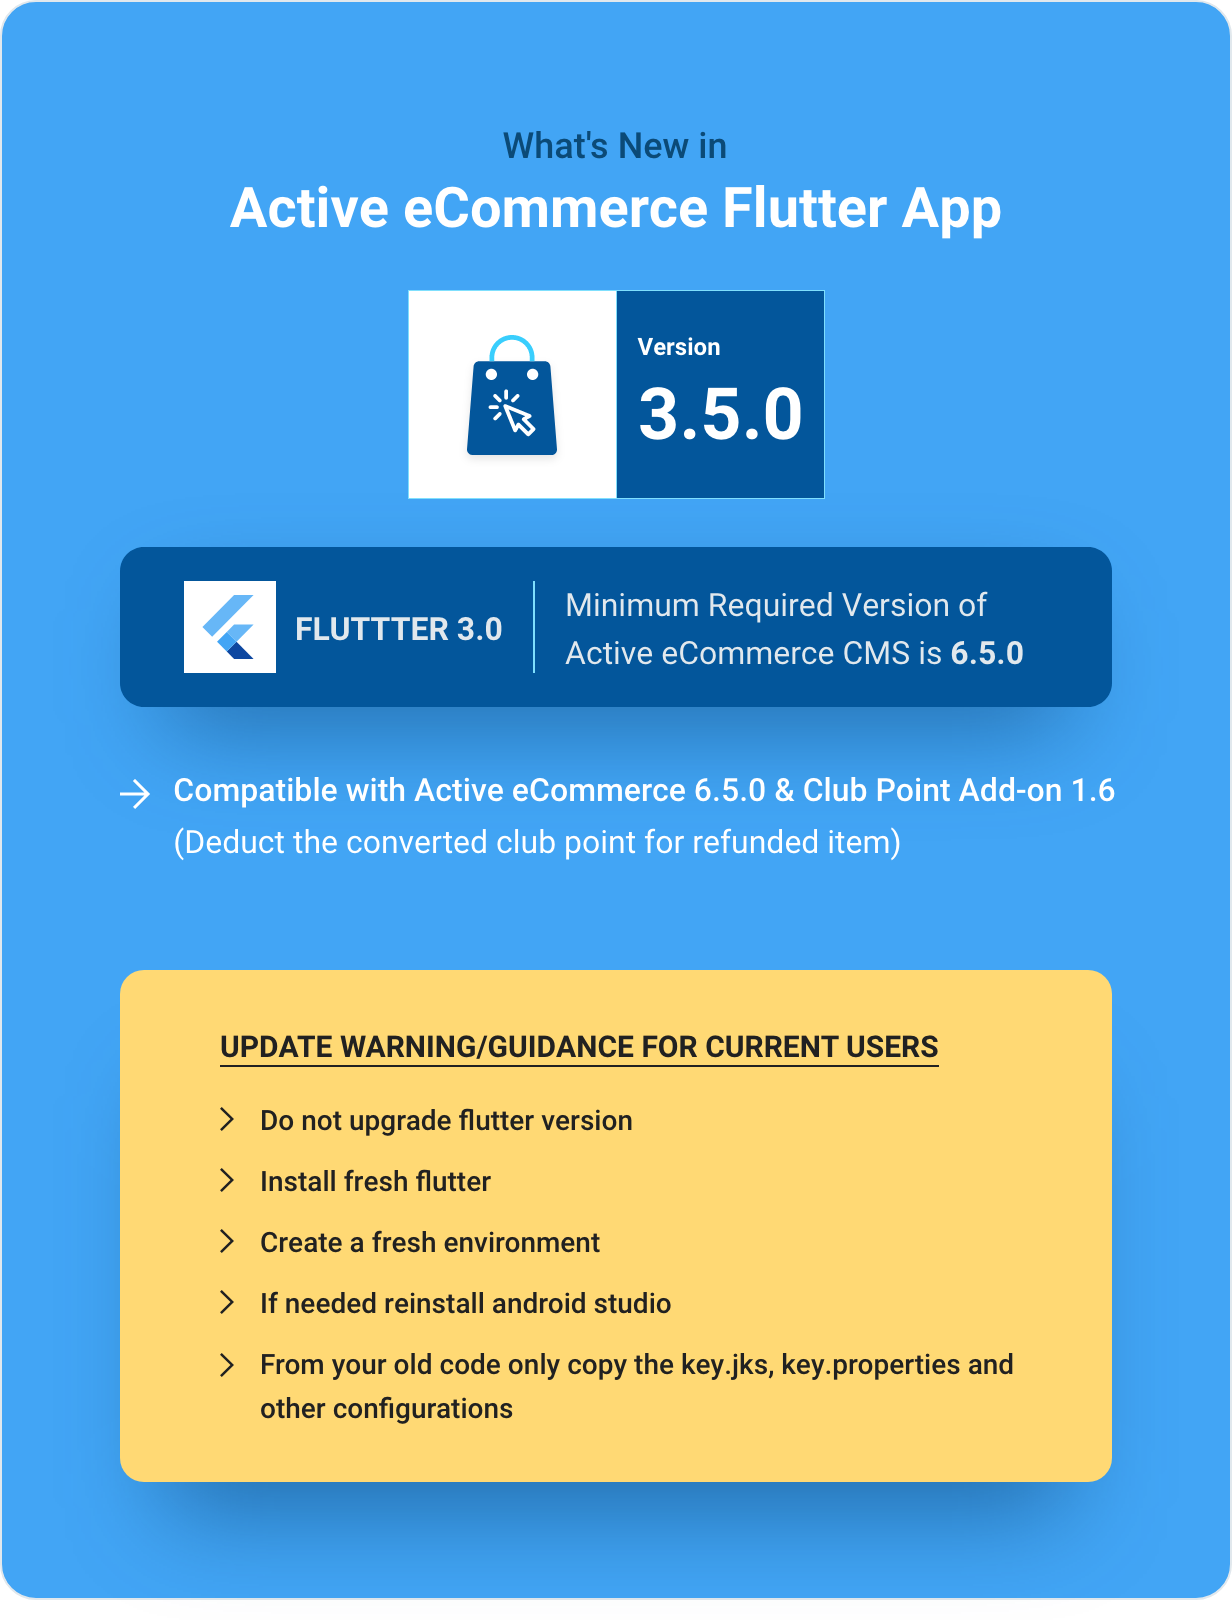 Active eCommerce Flutter App - 3